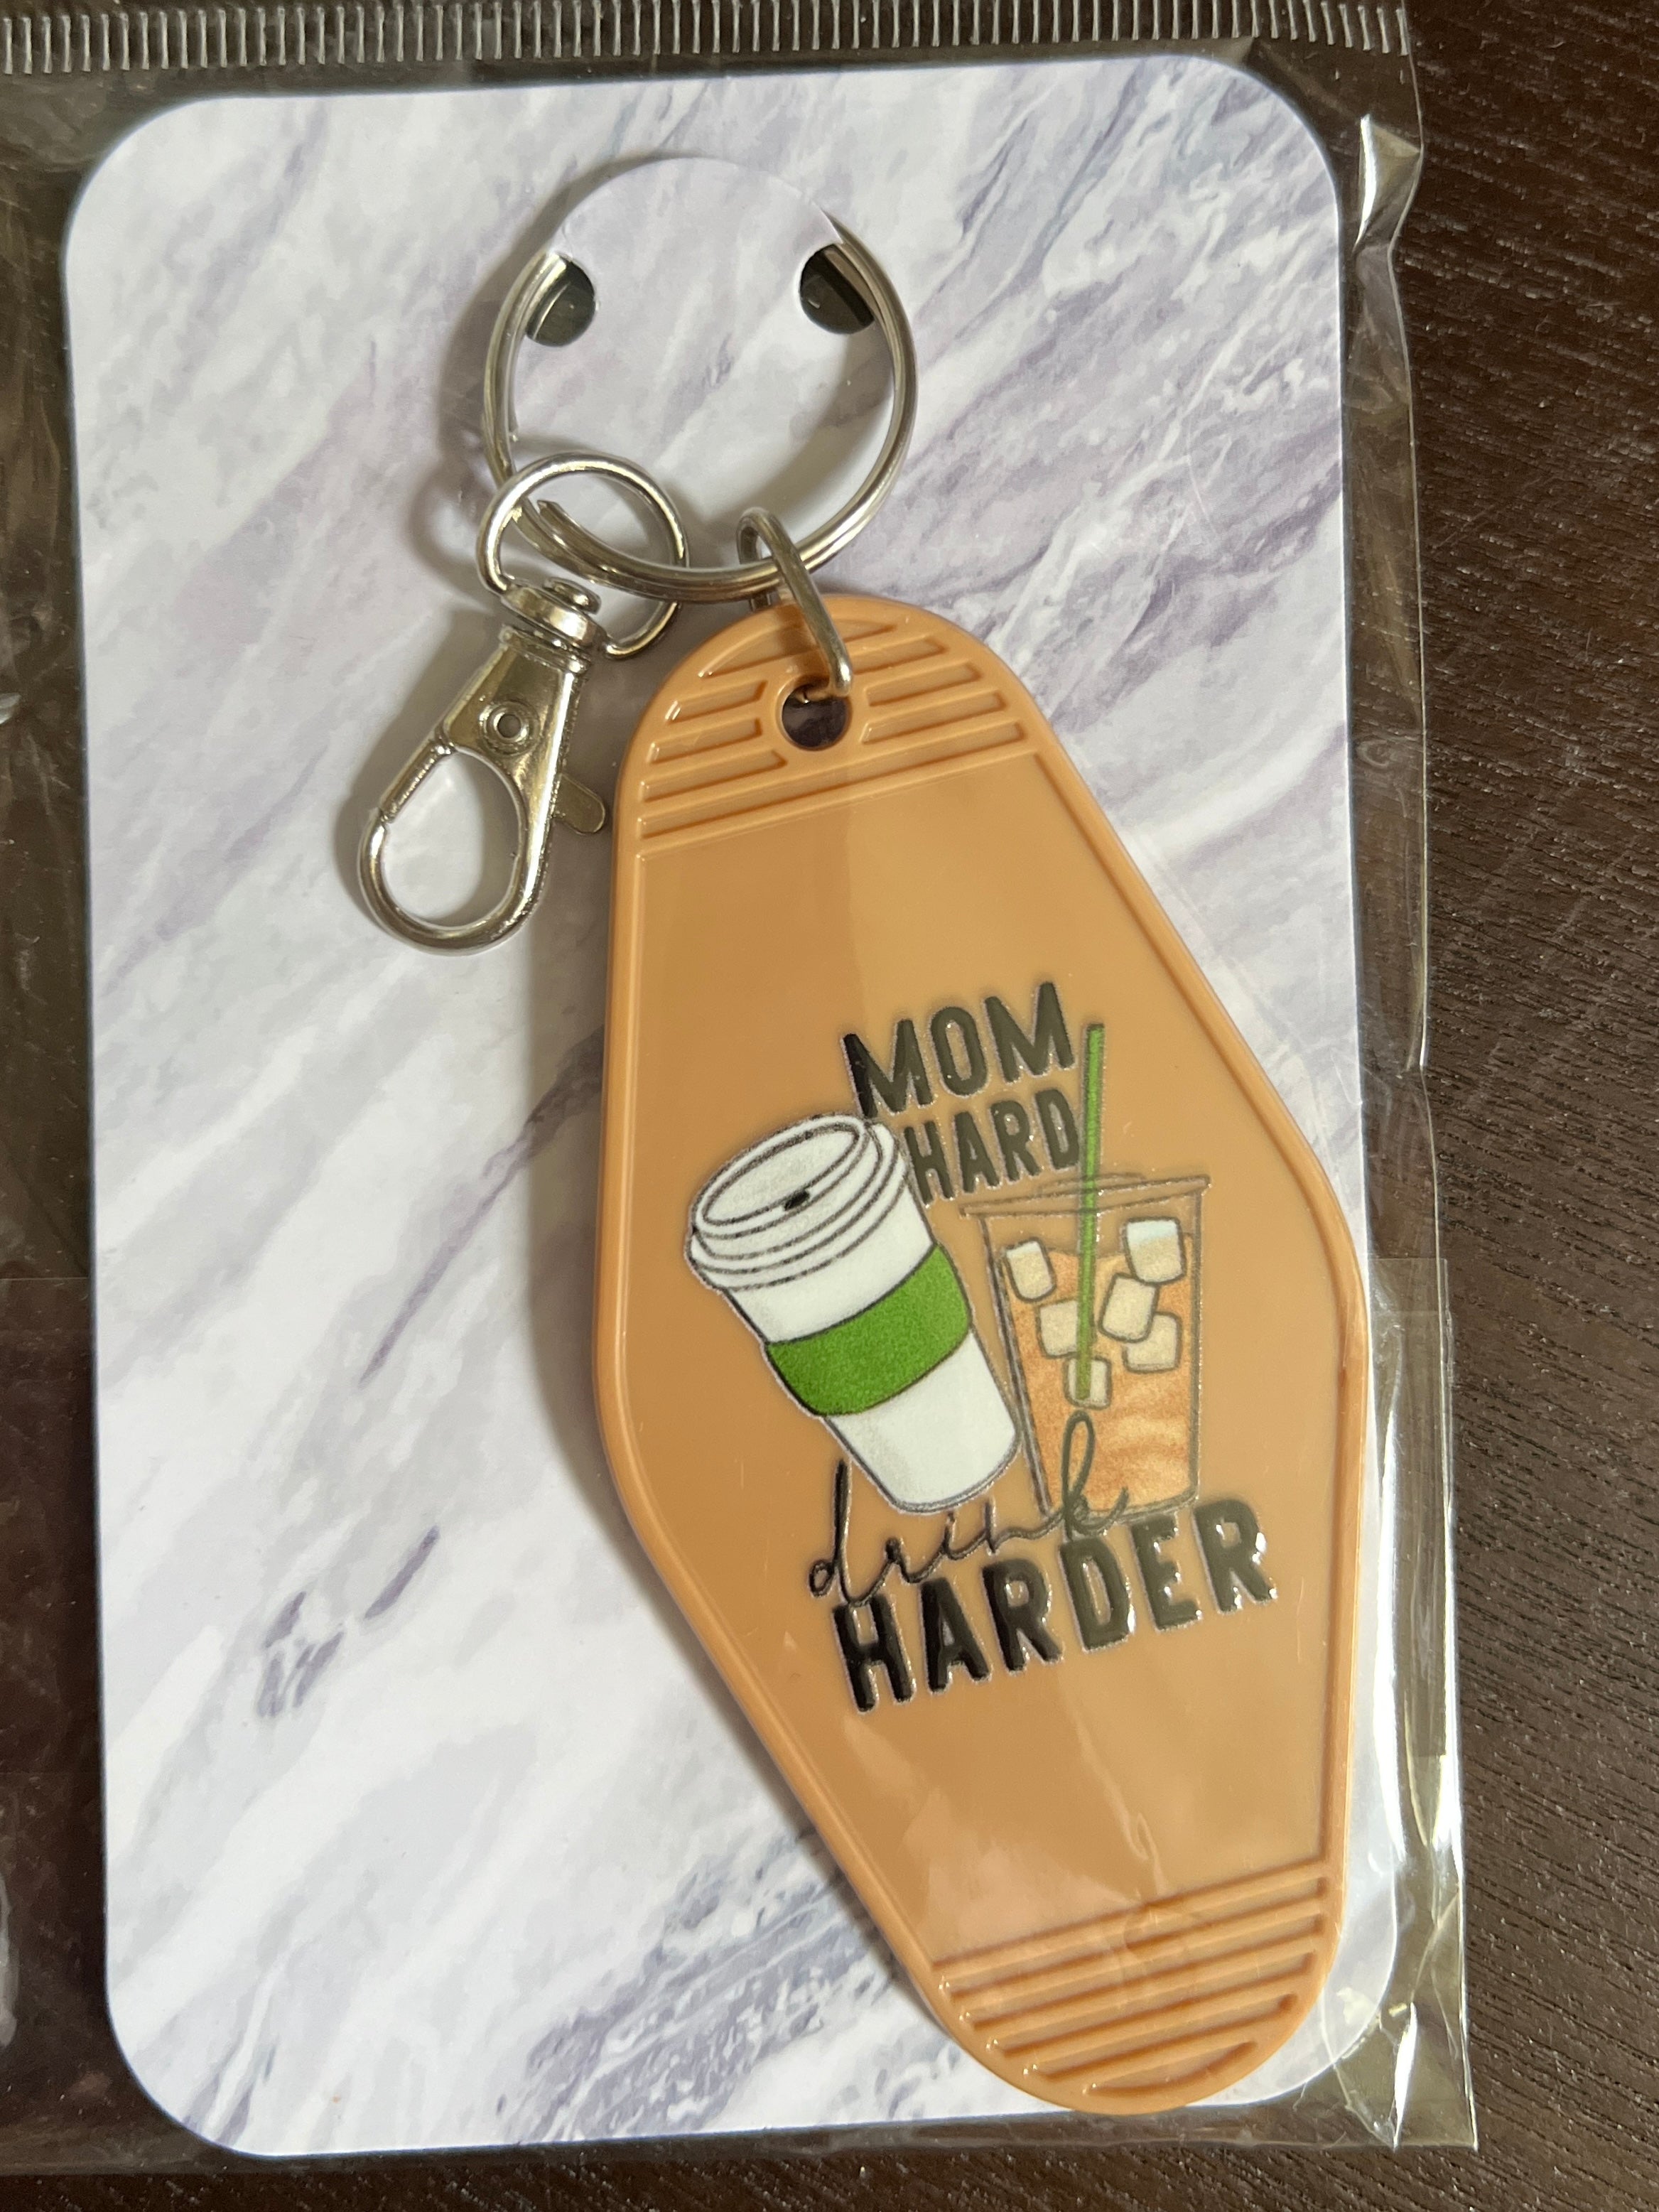 Mom Hard Drink Harder Motel Keychain